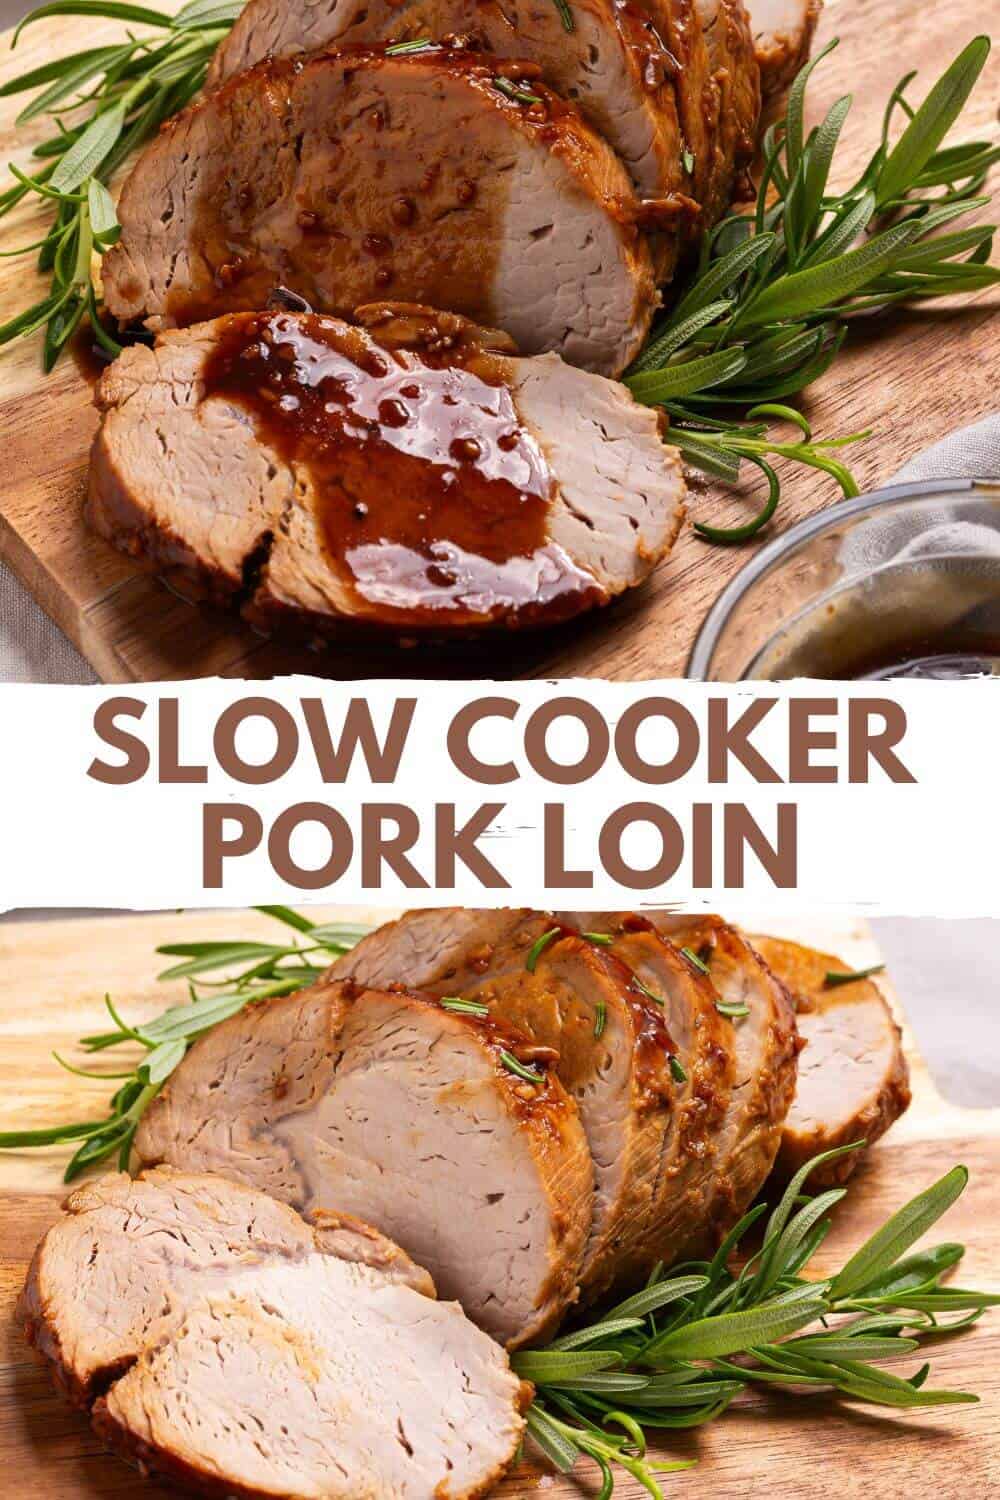 Slow cooker pork loin.